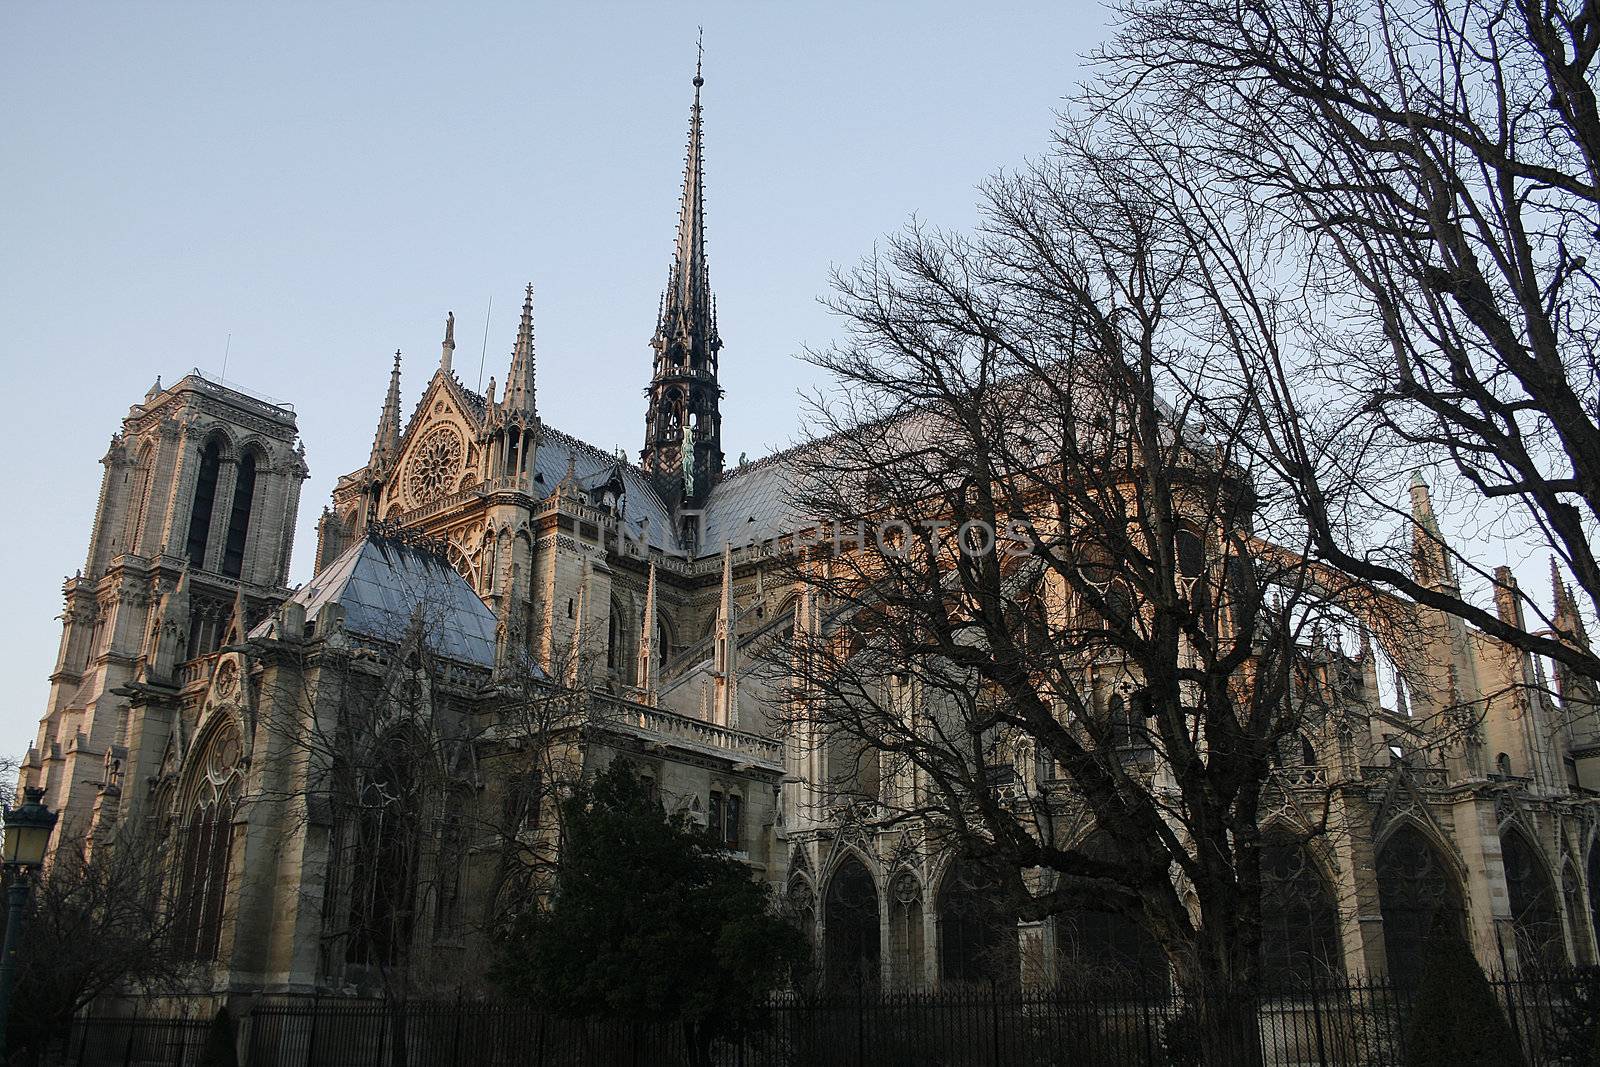 The Notre dame in Paris, France